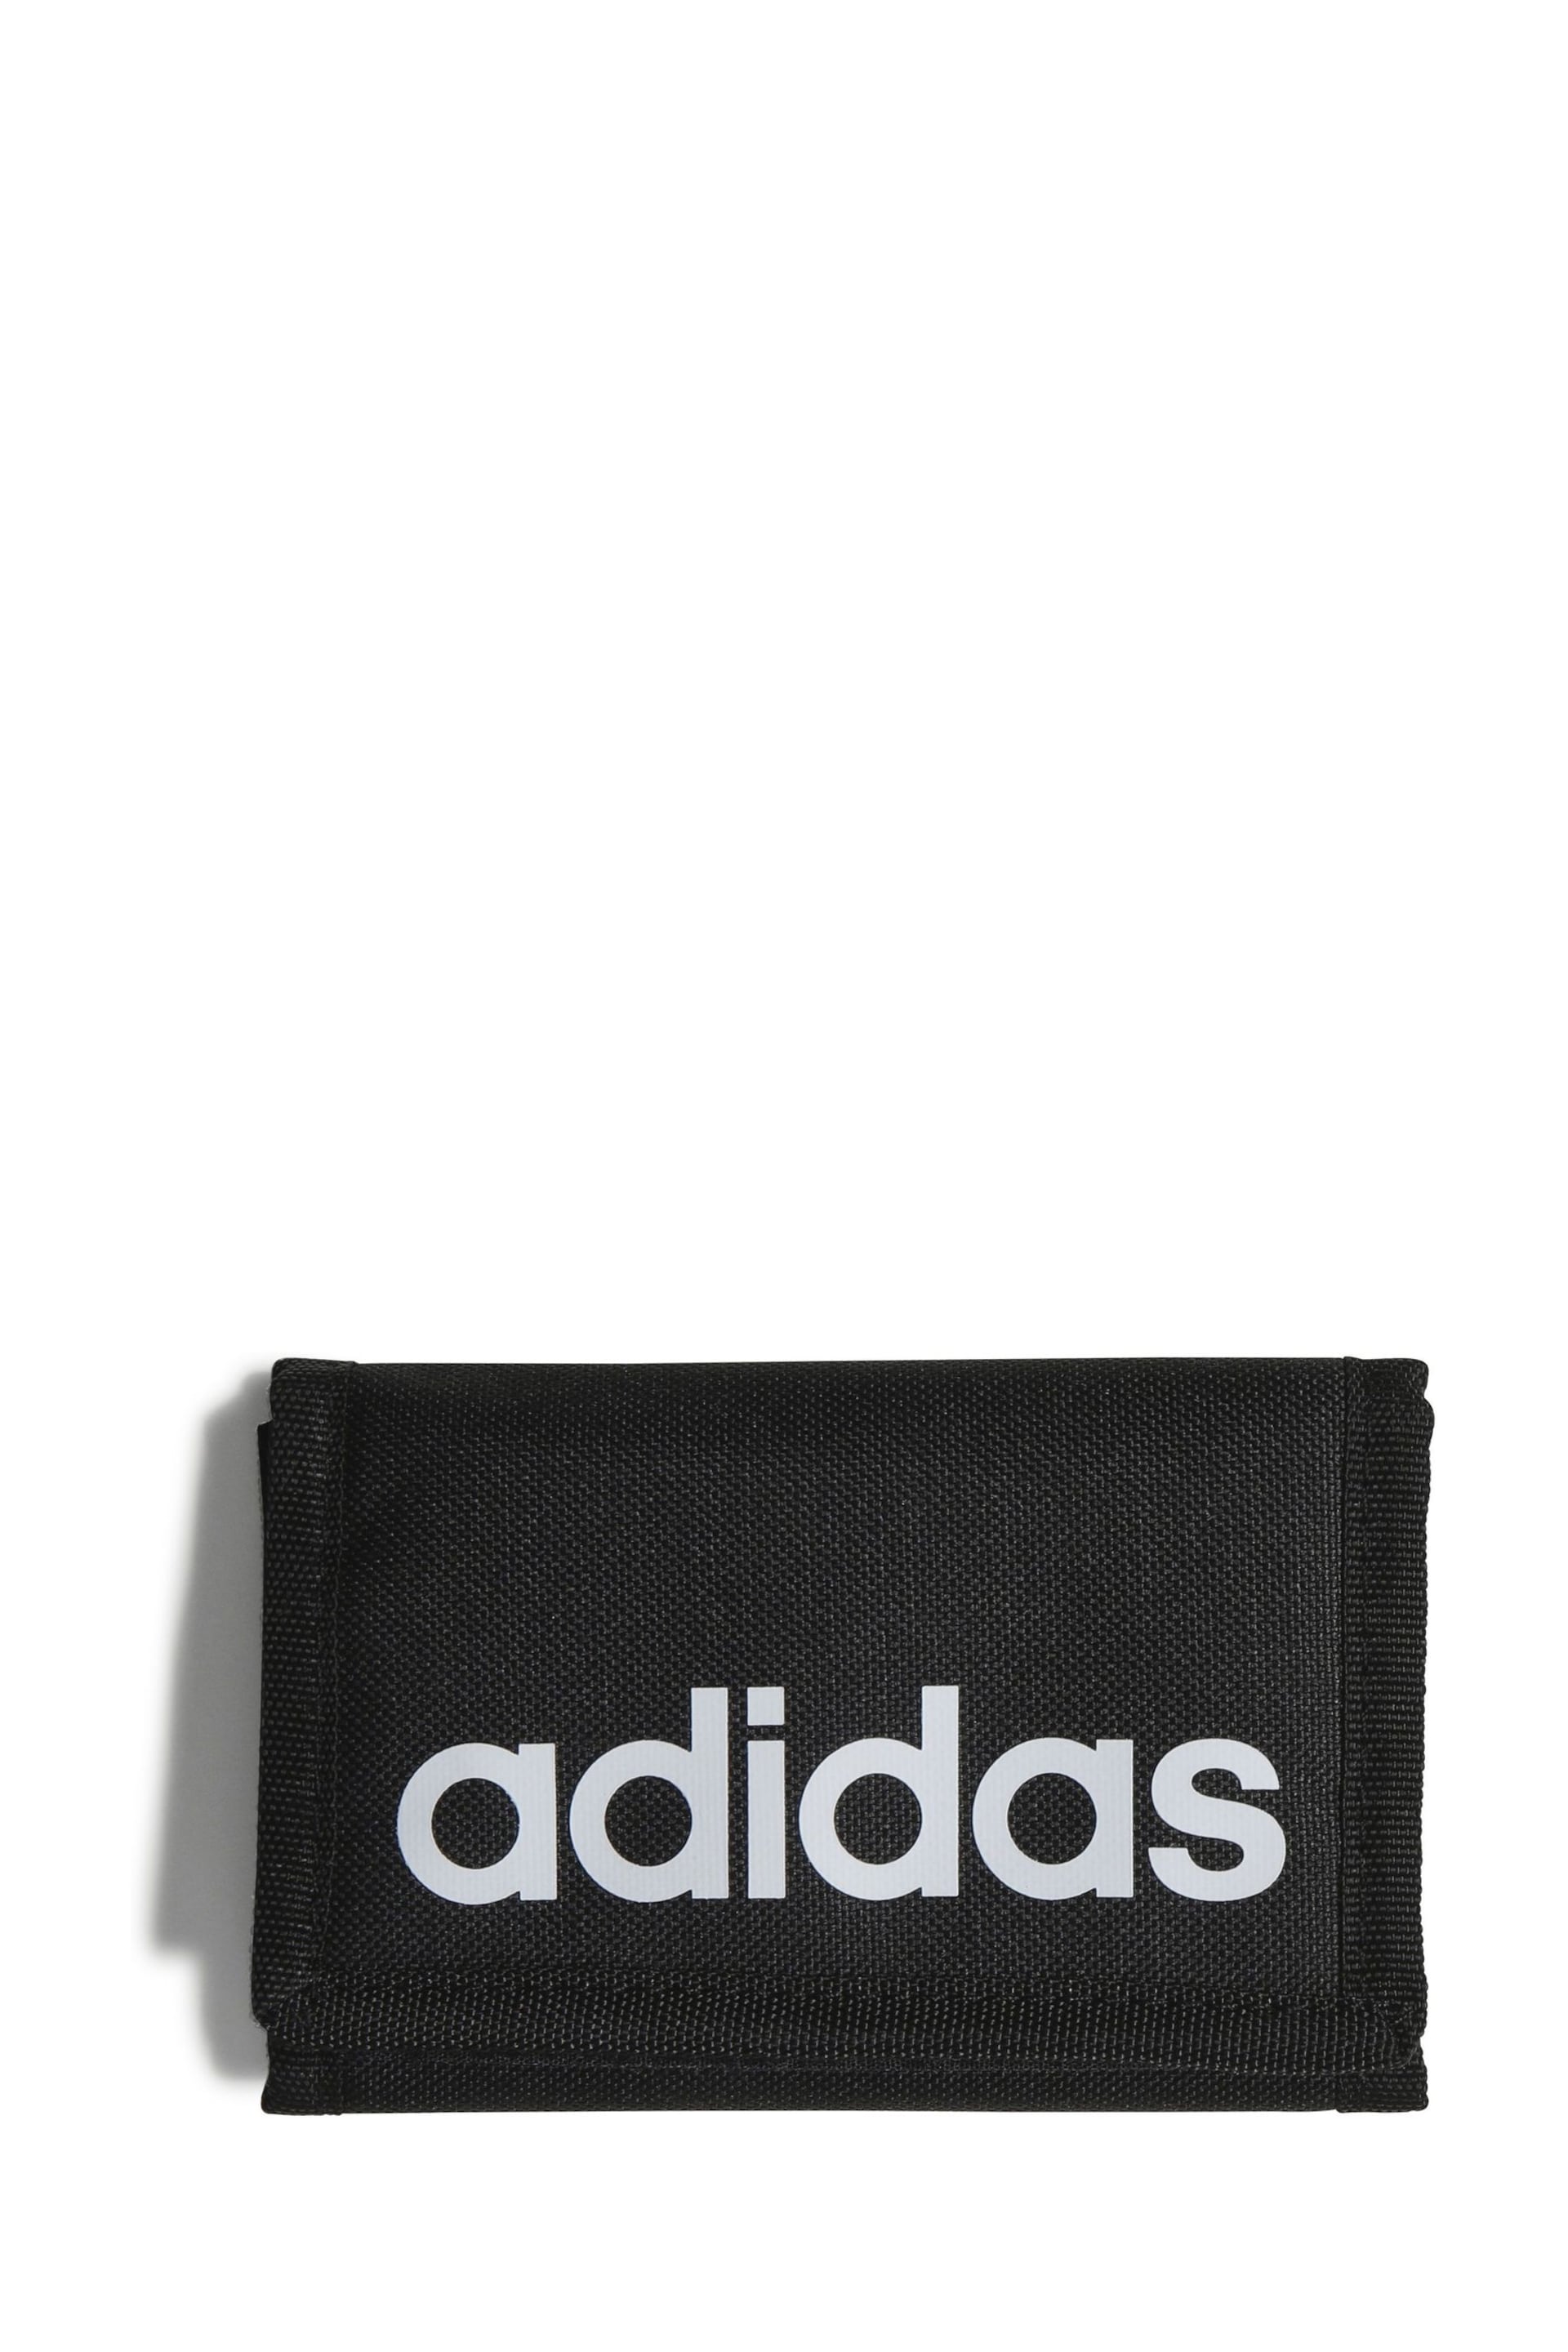 adidas Black Essentials Wallet - Image 1 of 5